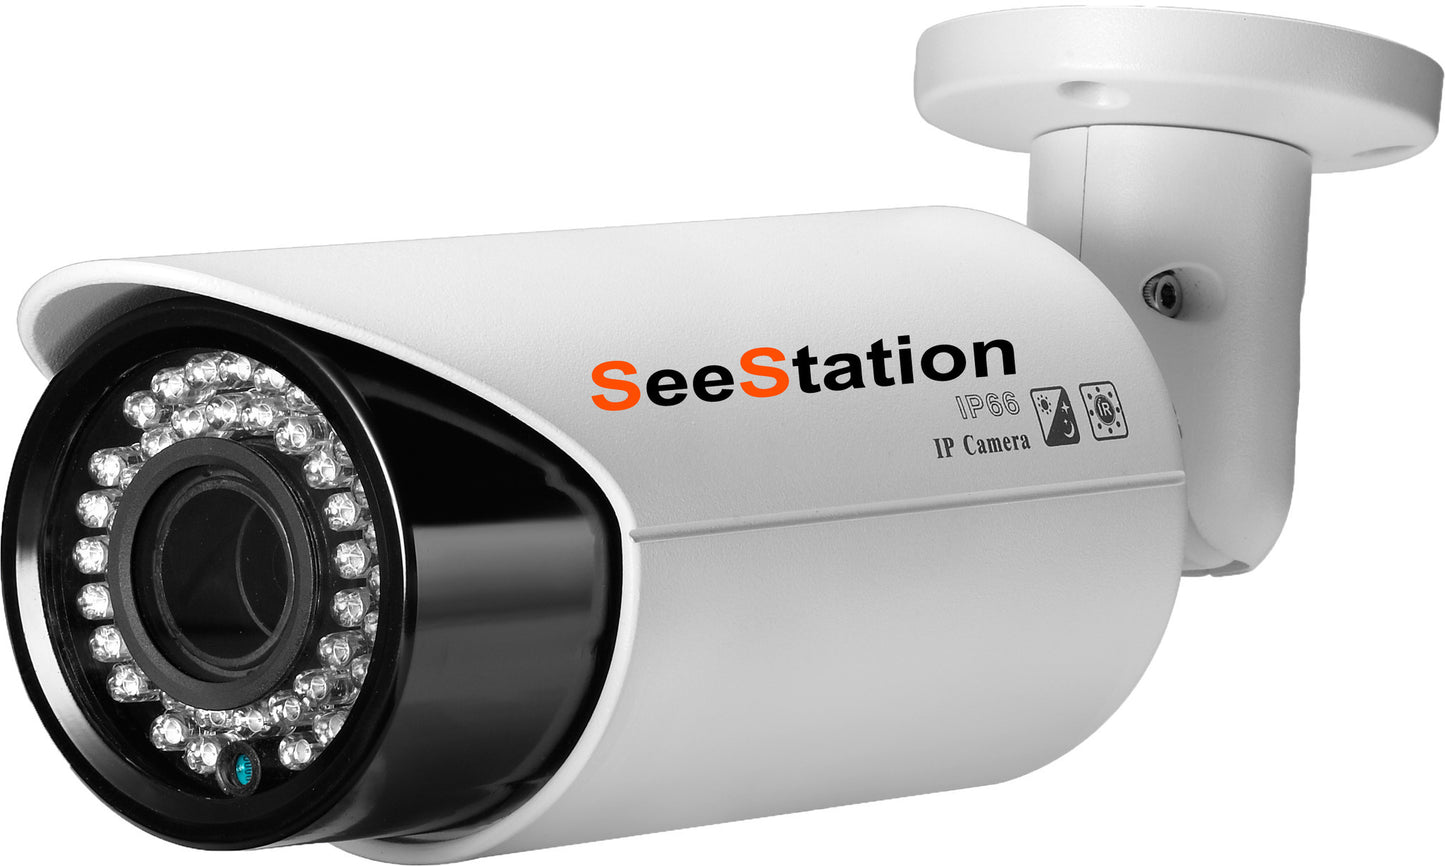 SeeStation (IP-D) CIP1155IF9-AW IP Bullet Camera 5MP IR POE ONVIF 2.8-12mm Varifocal Lens